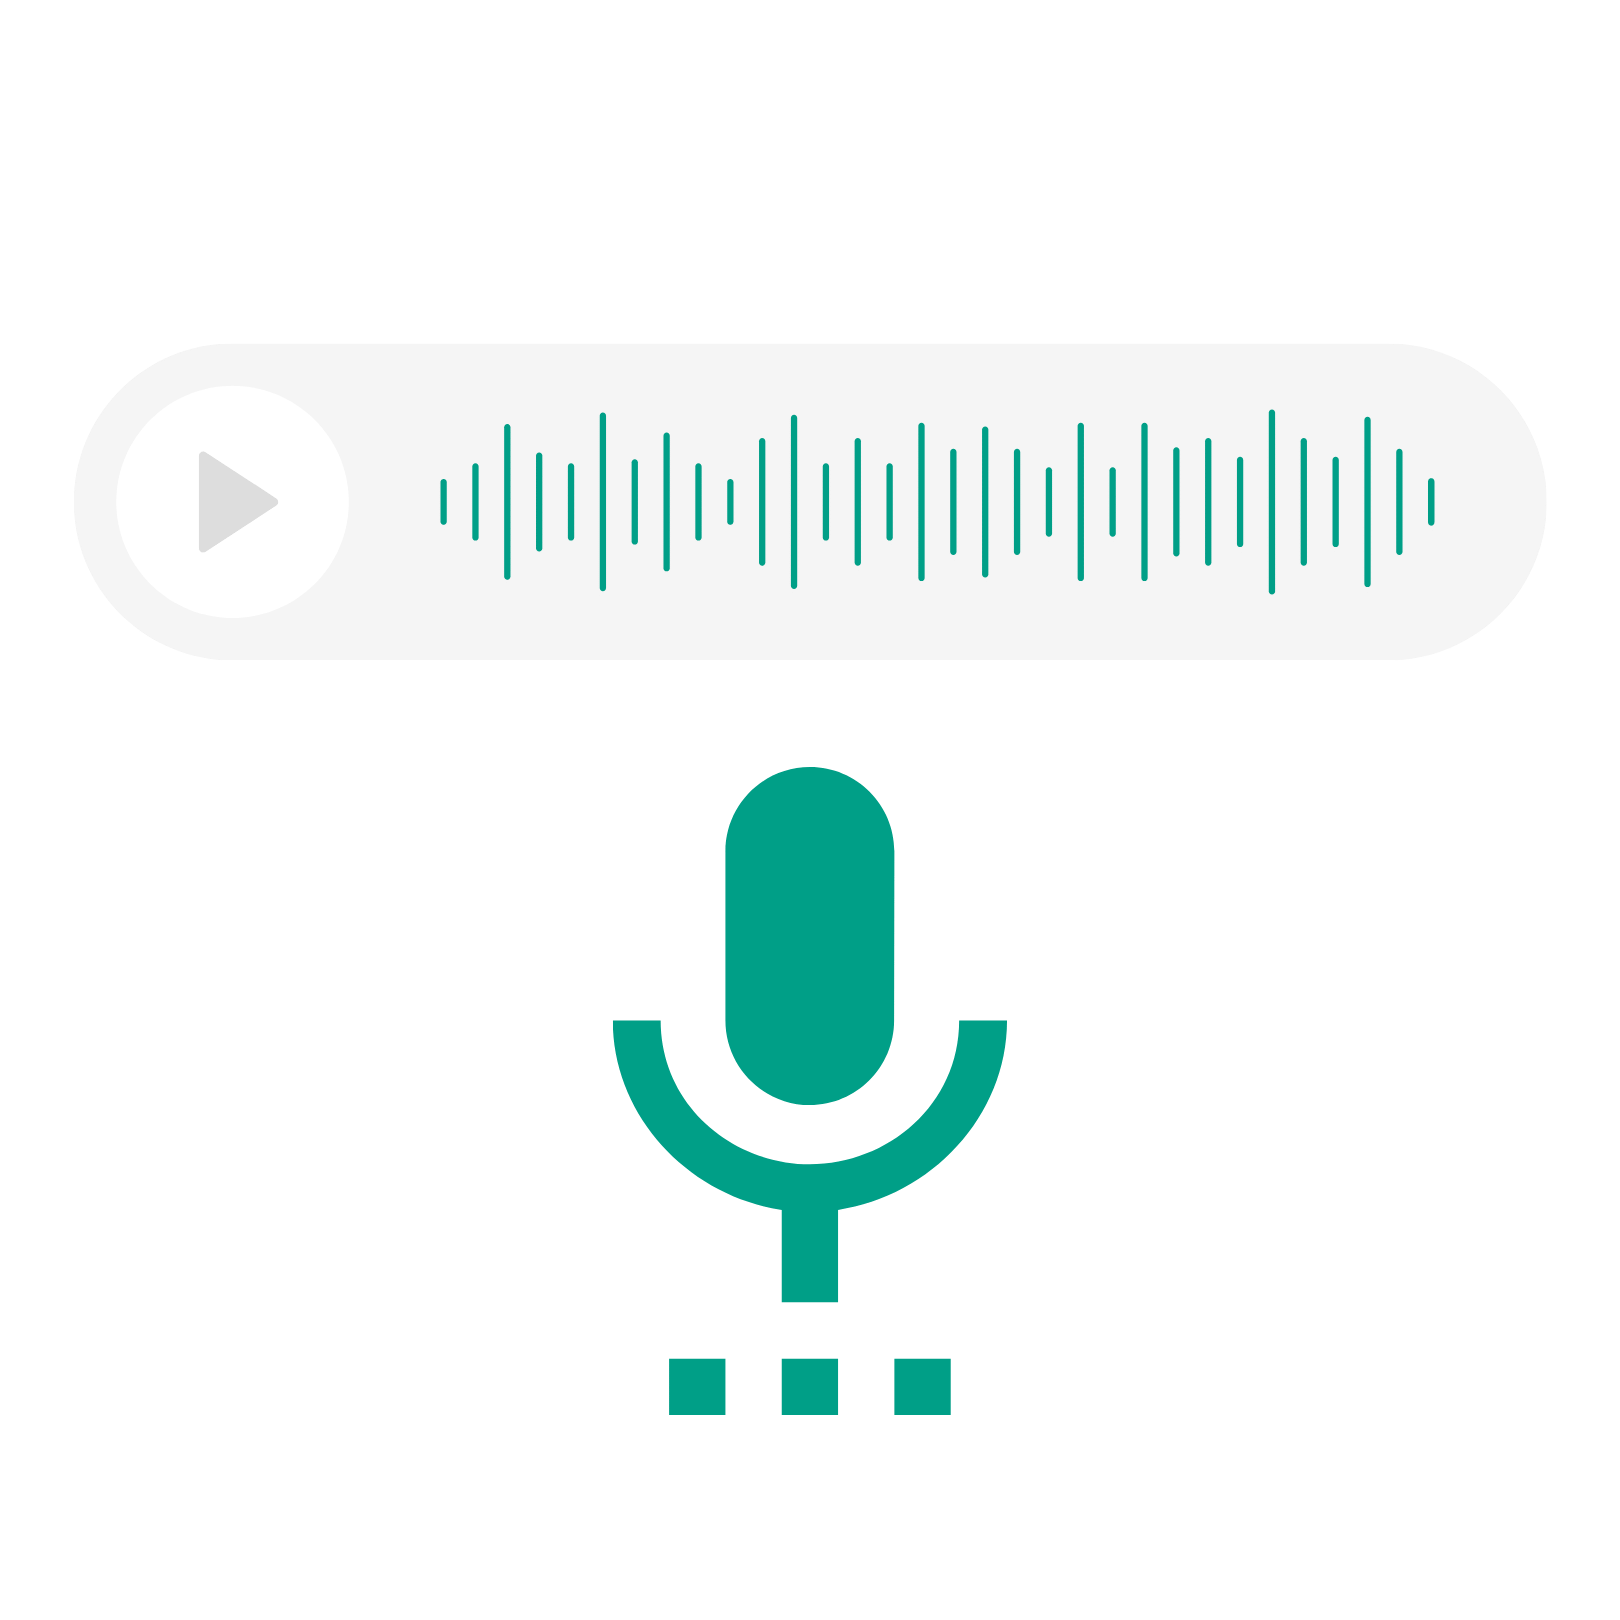 paramétrage d'un serveur vocal interactif